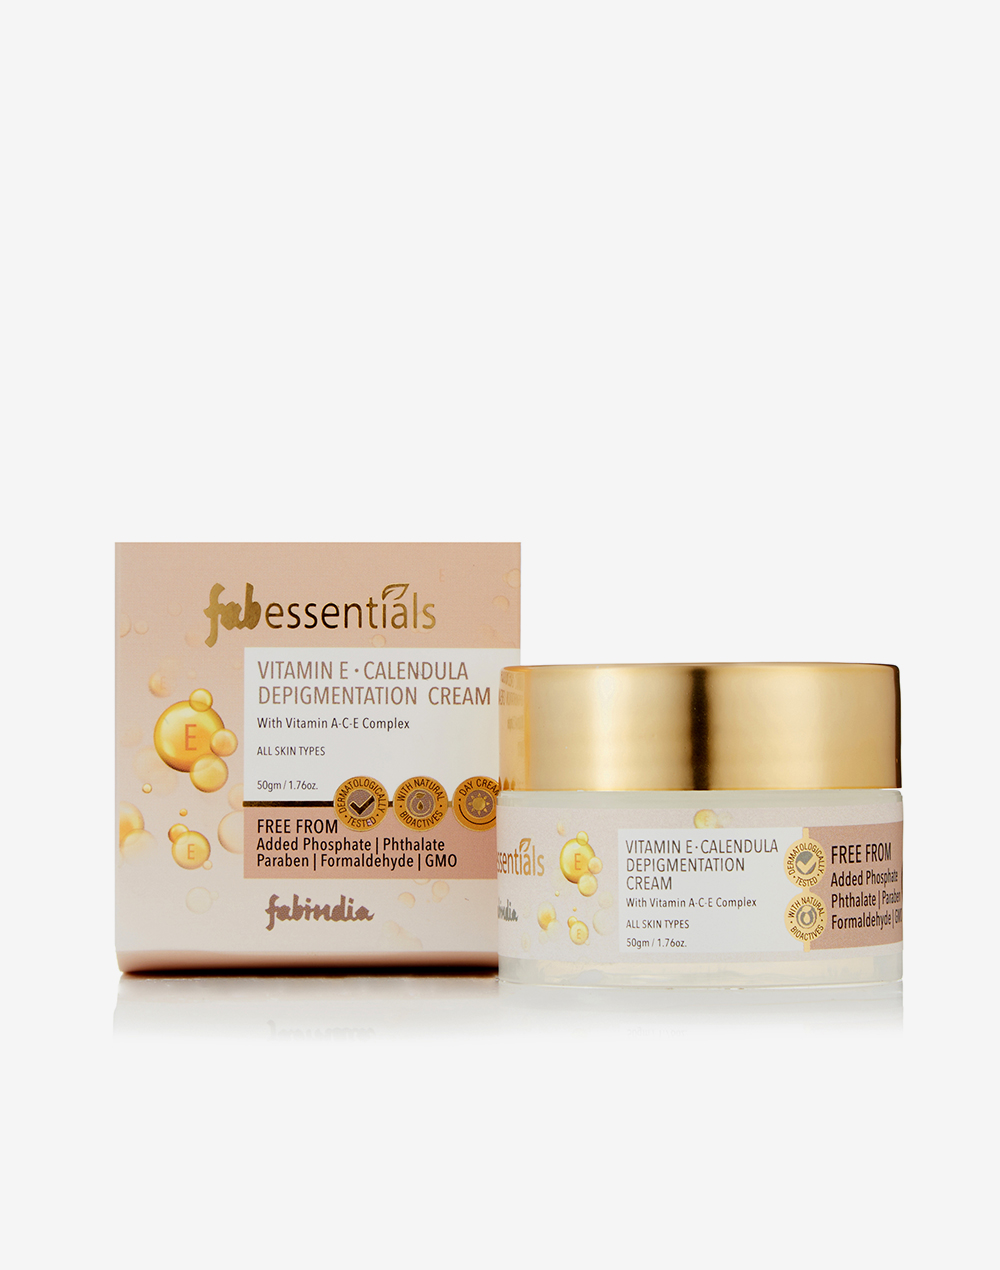 Fabessentials Vitamin E Calendula Depigmentation Cream - 50 gm